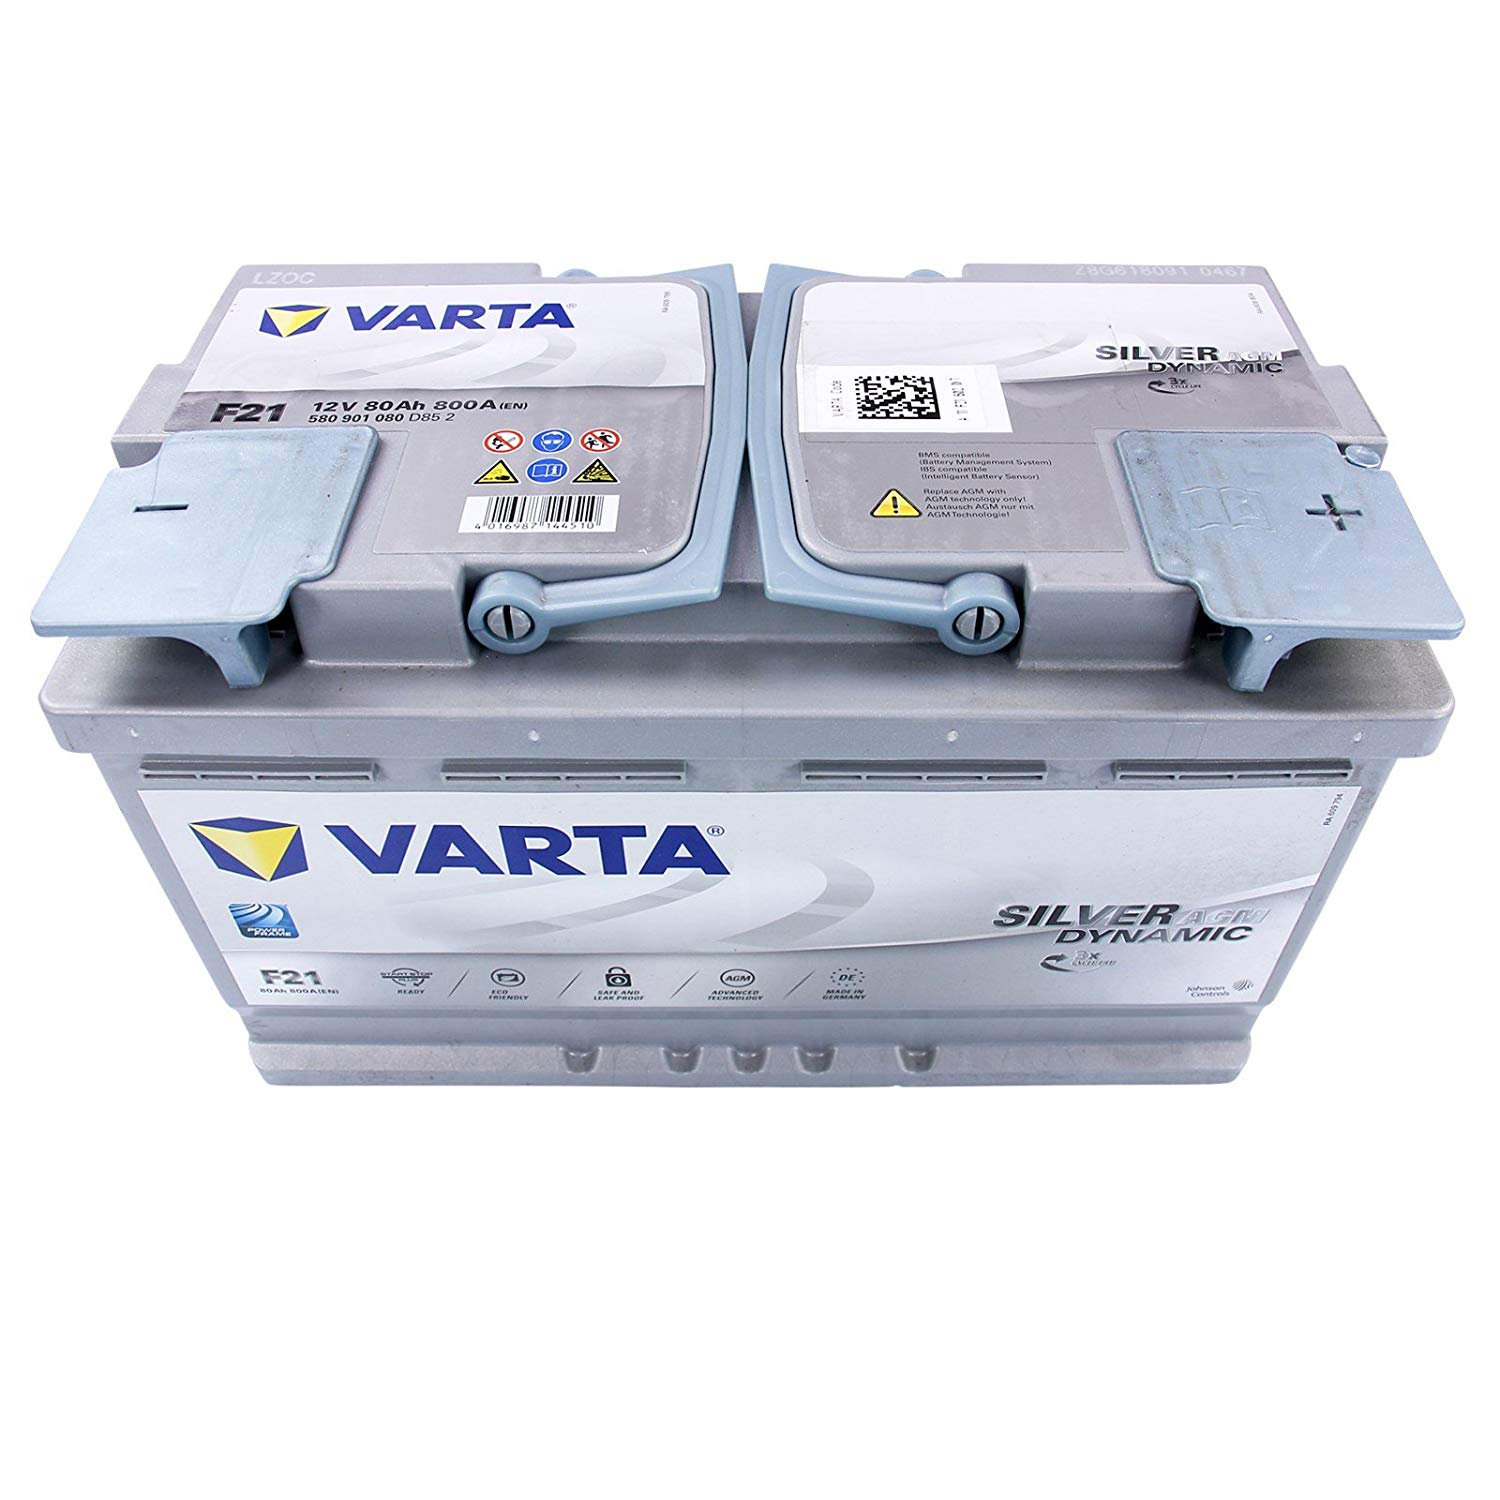 BATTERIA VARTA F21 START&STOP PLUS 80AH 800A di spunto 315x175x190  580901080 SIL - Shopping.com